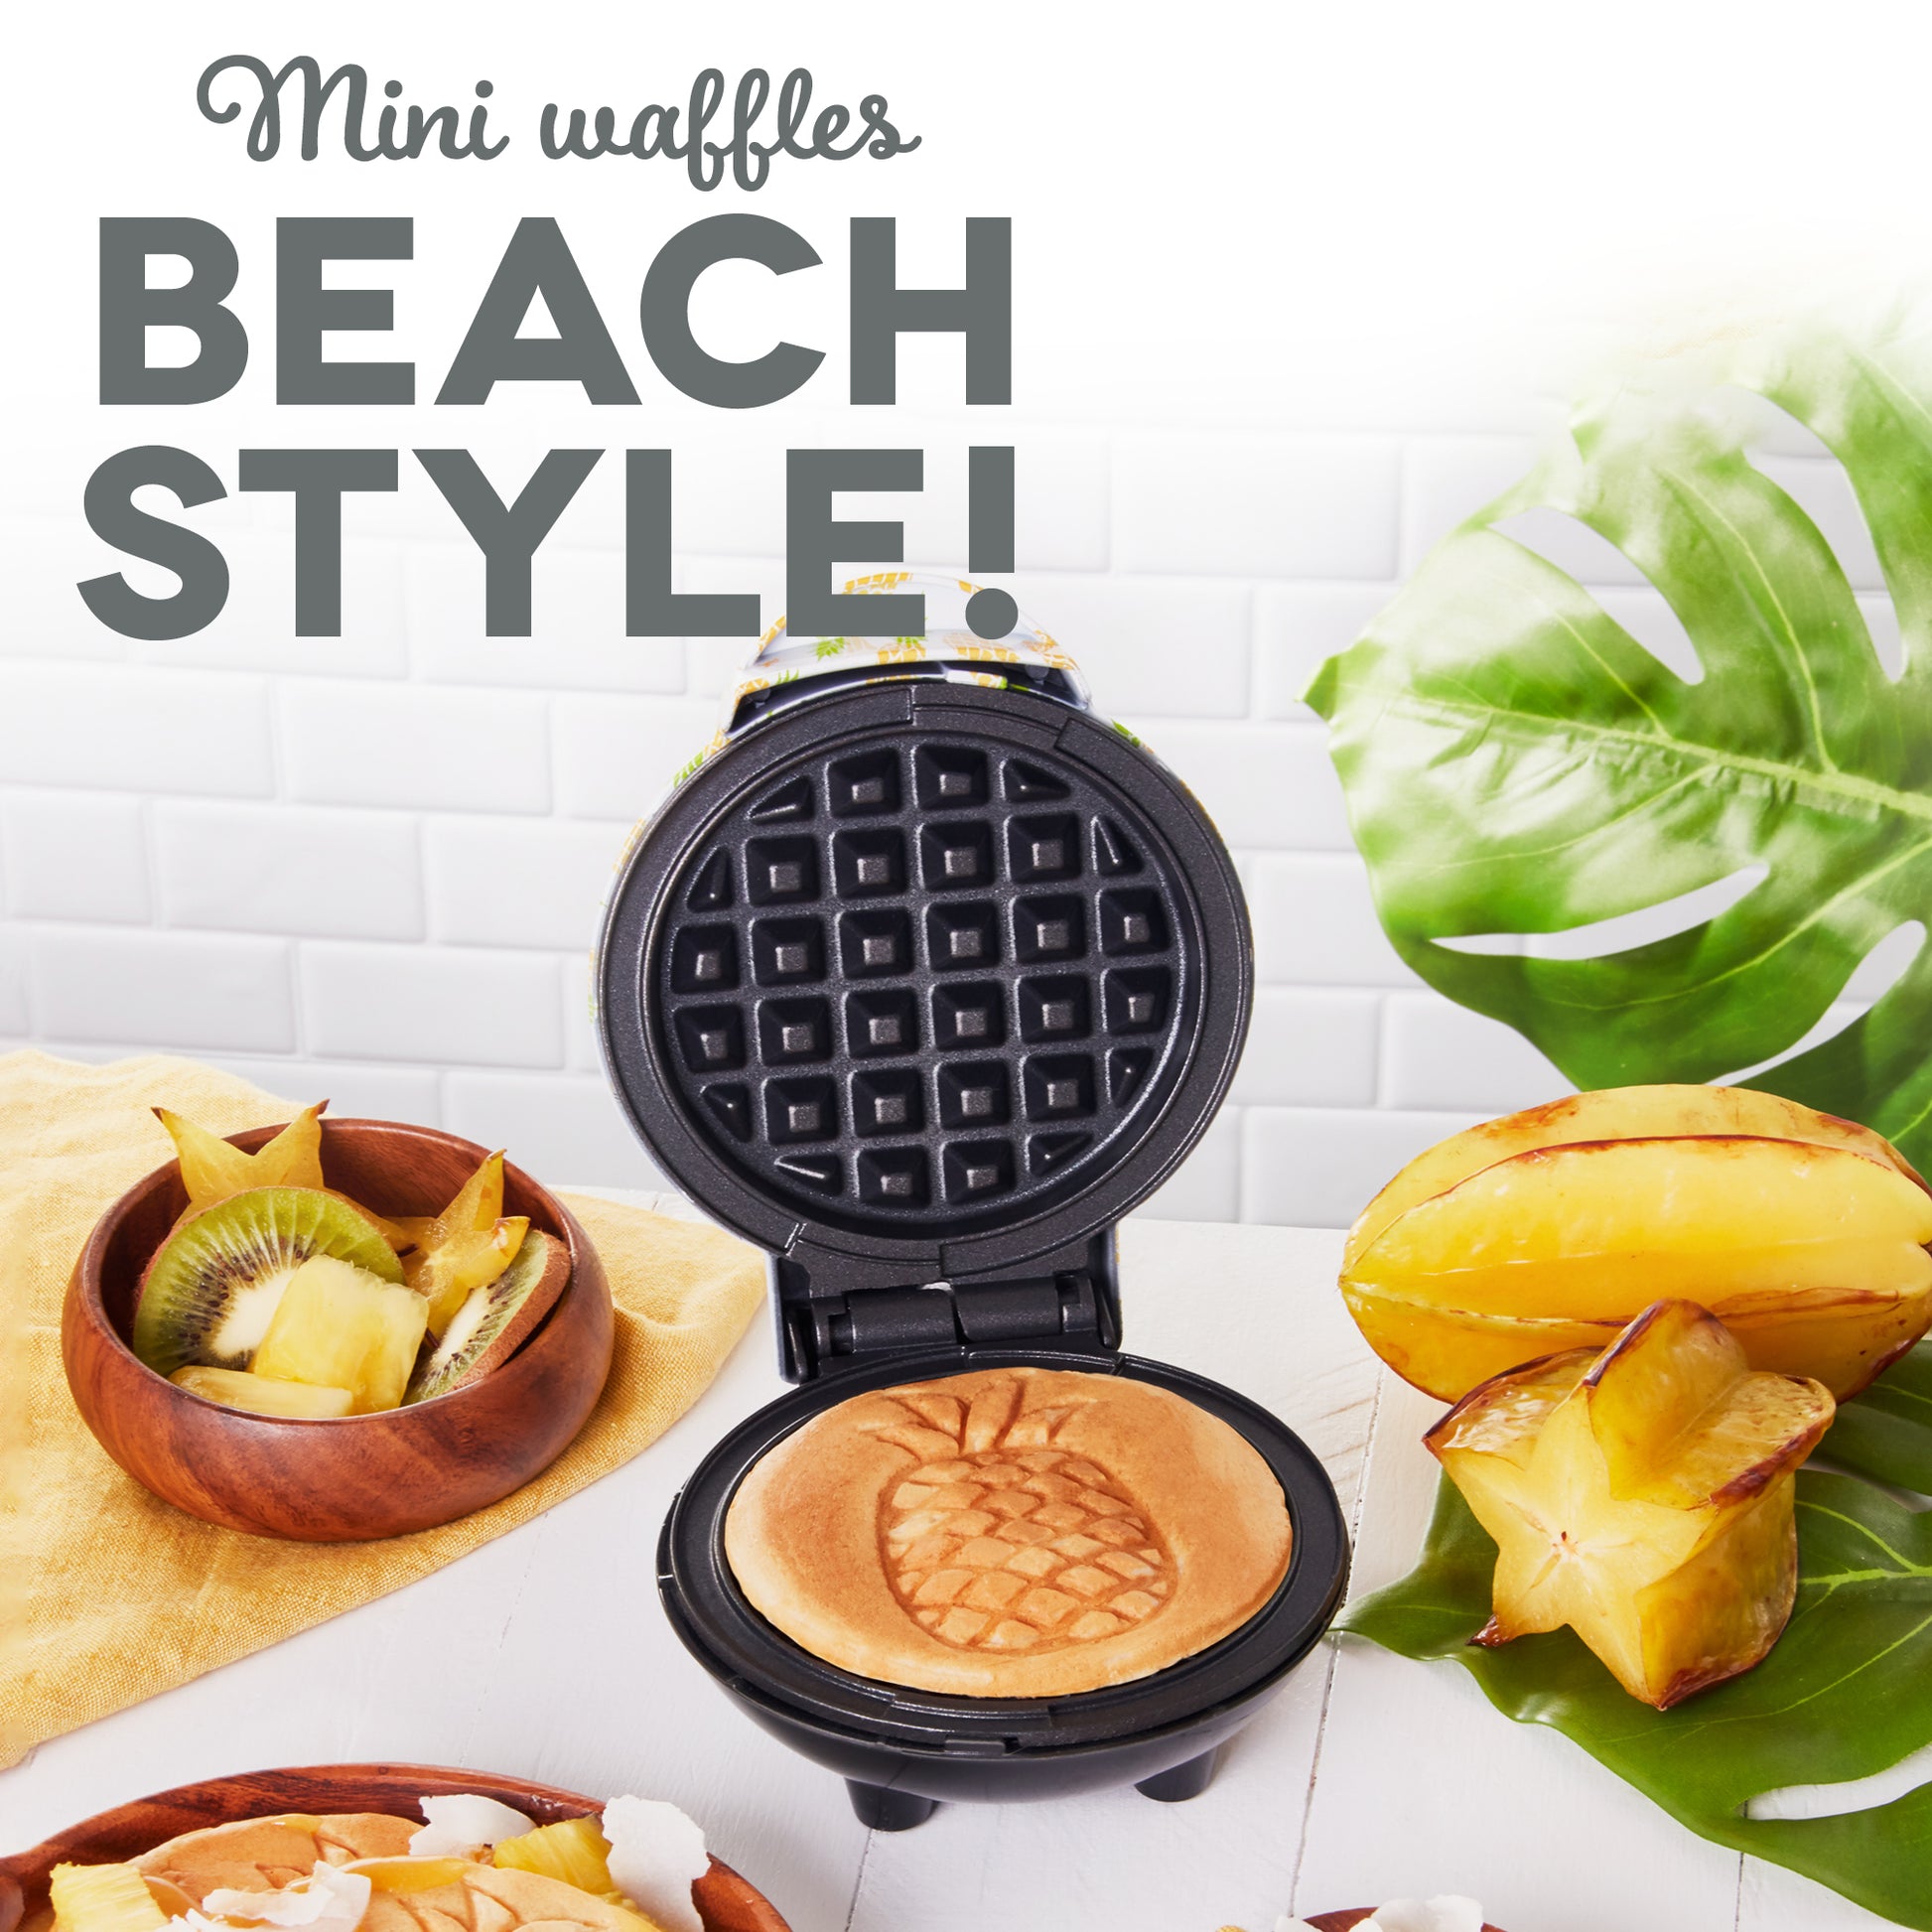 Dash Honeycomb Mini Waffle Maker